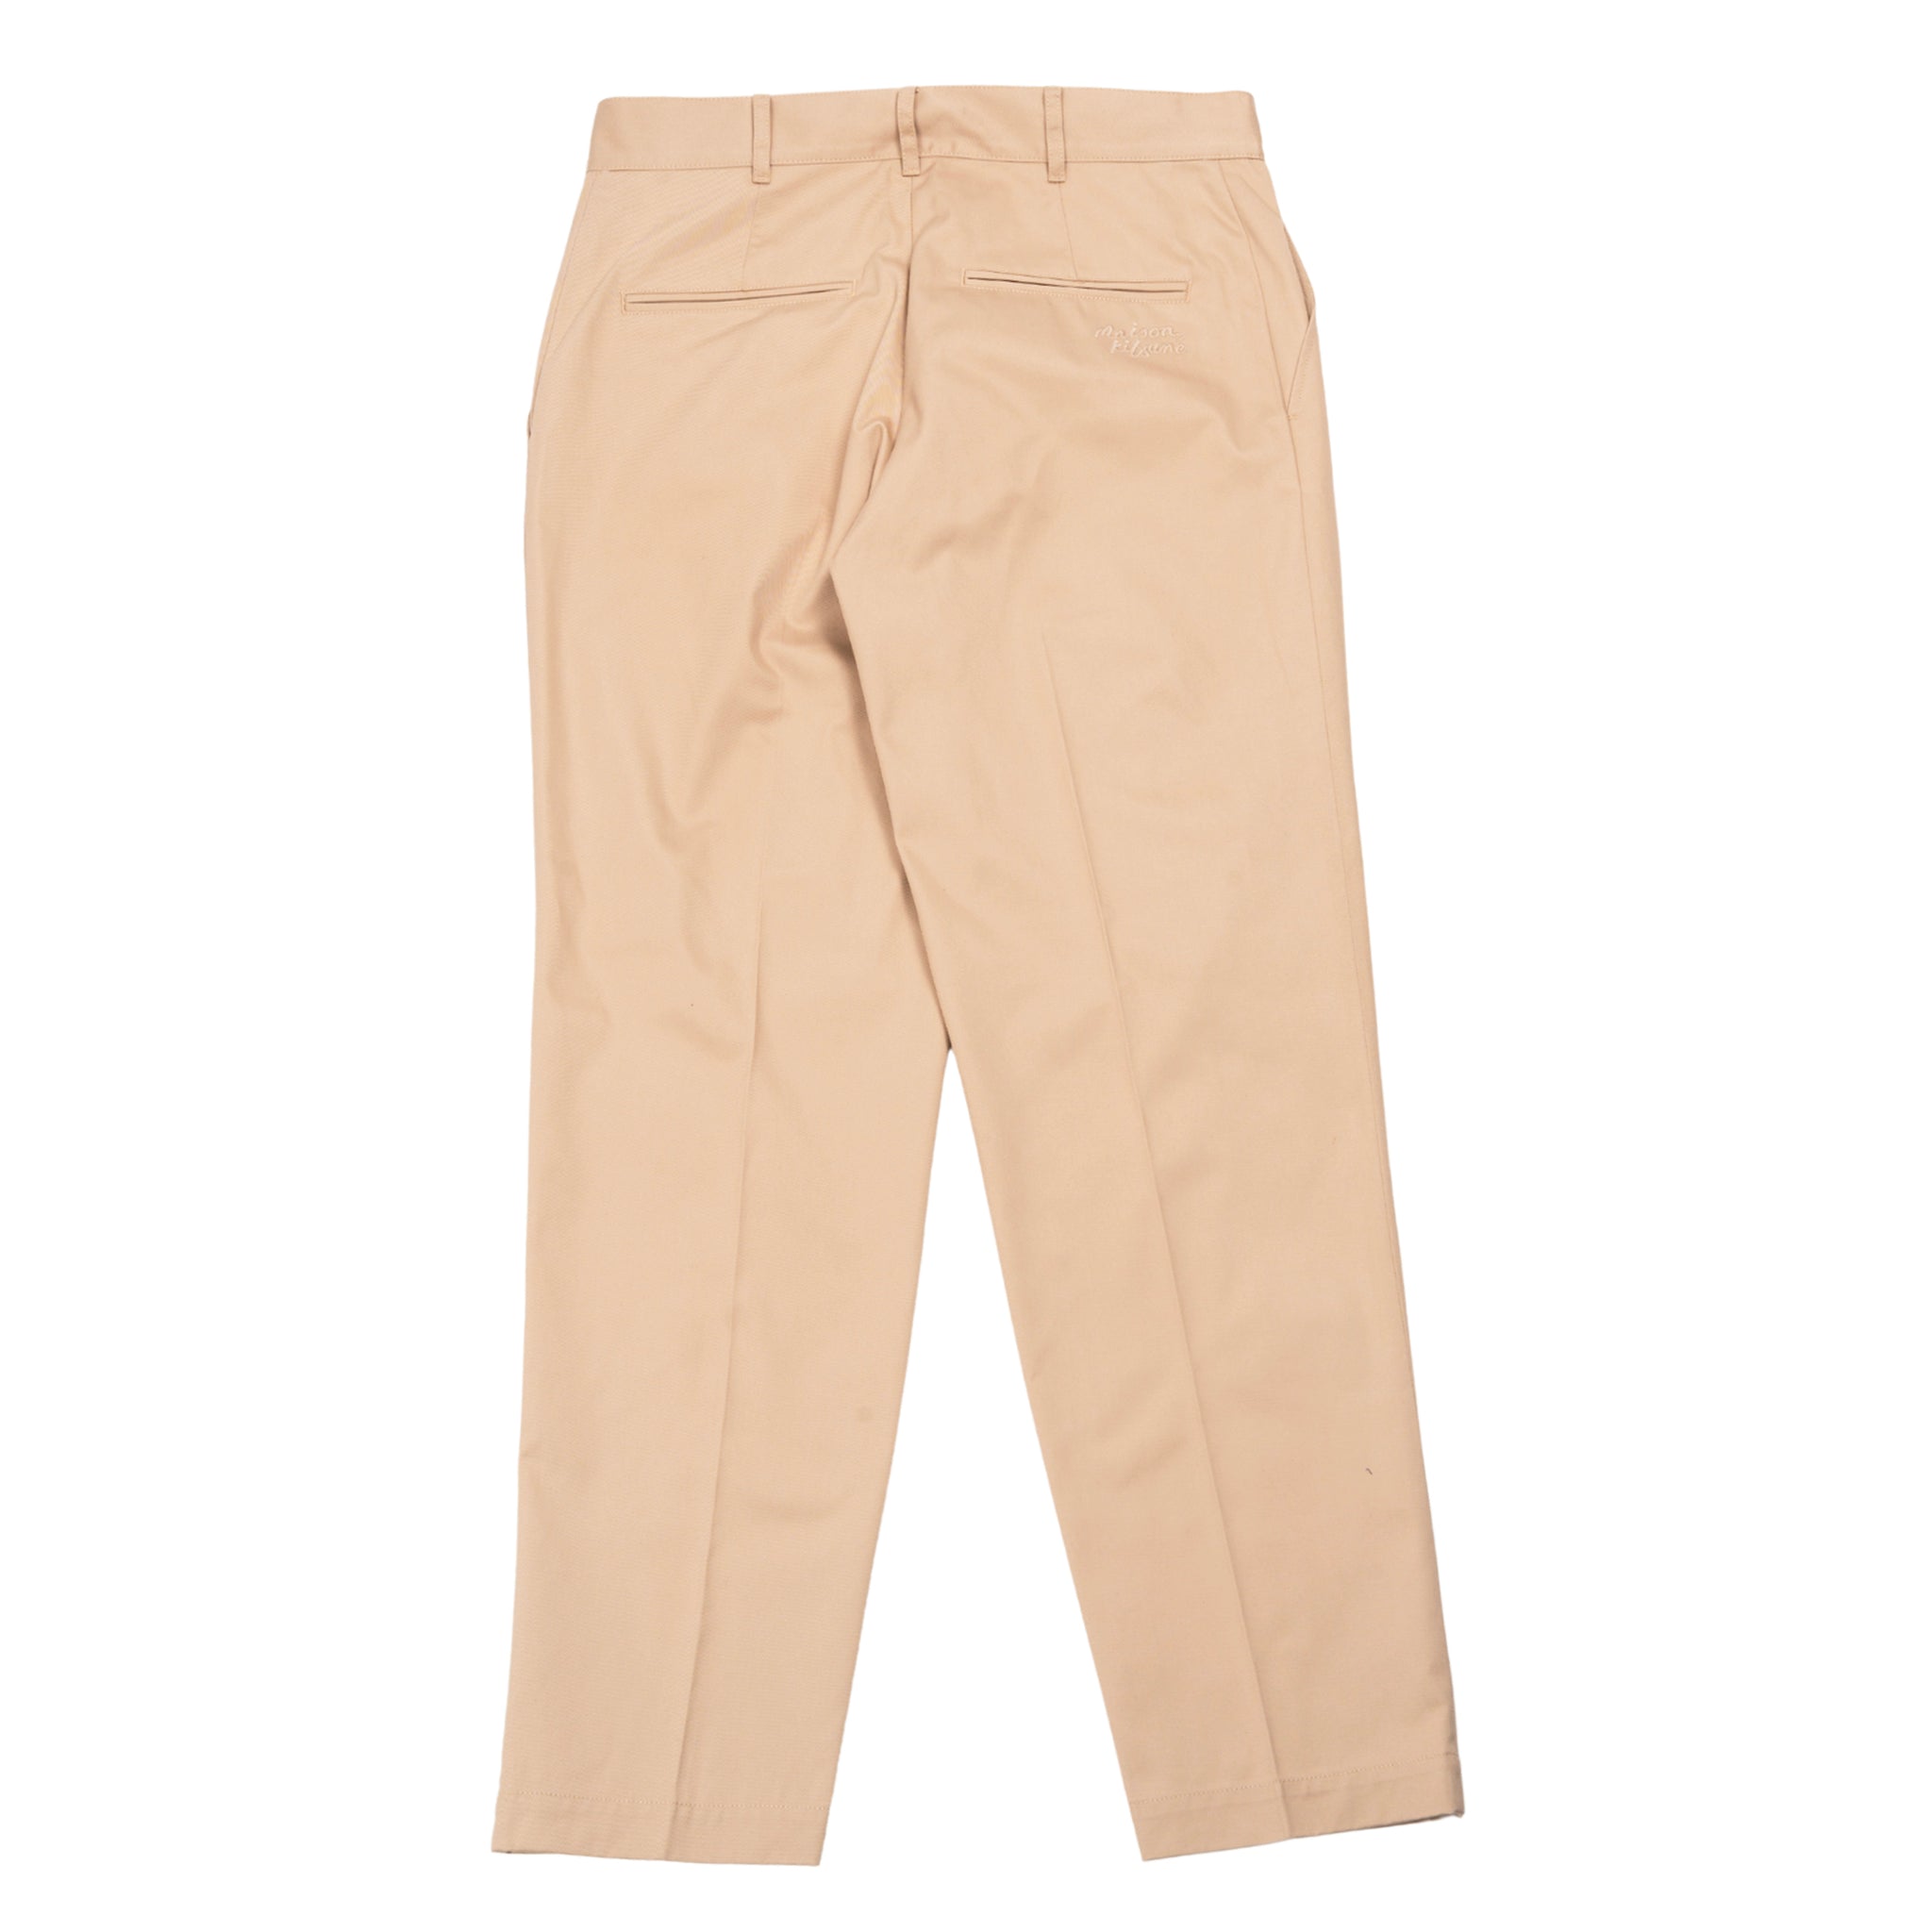 Straight pantalone chino in cotone in beige